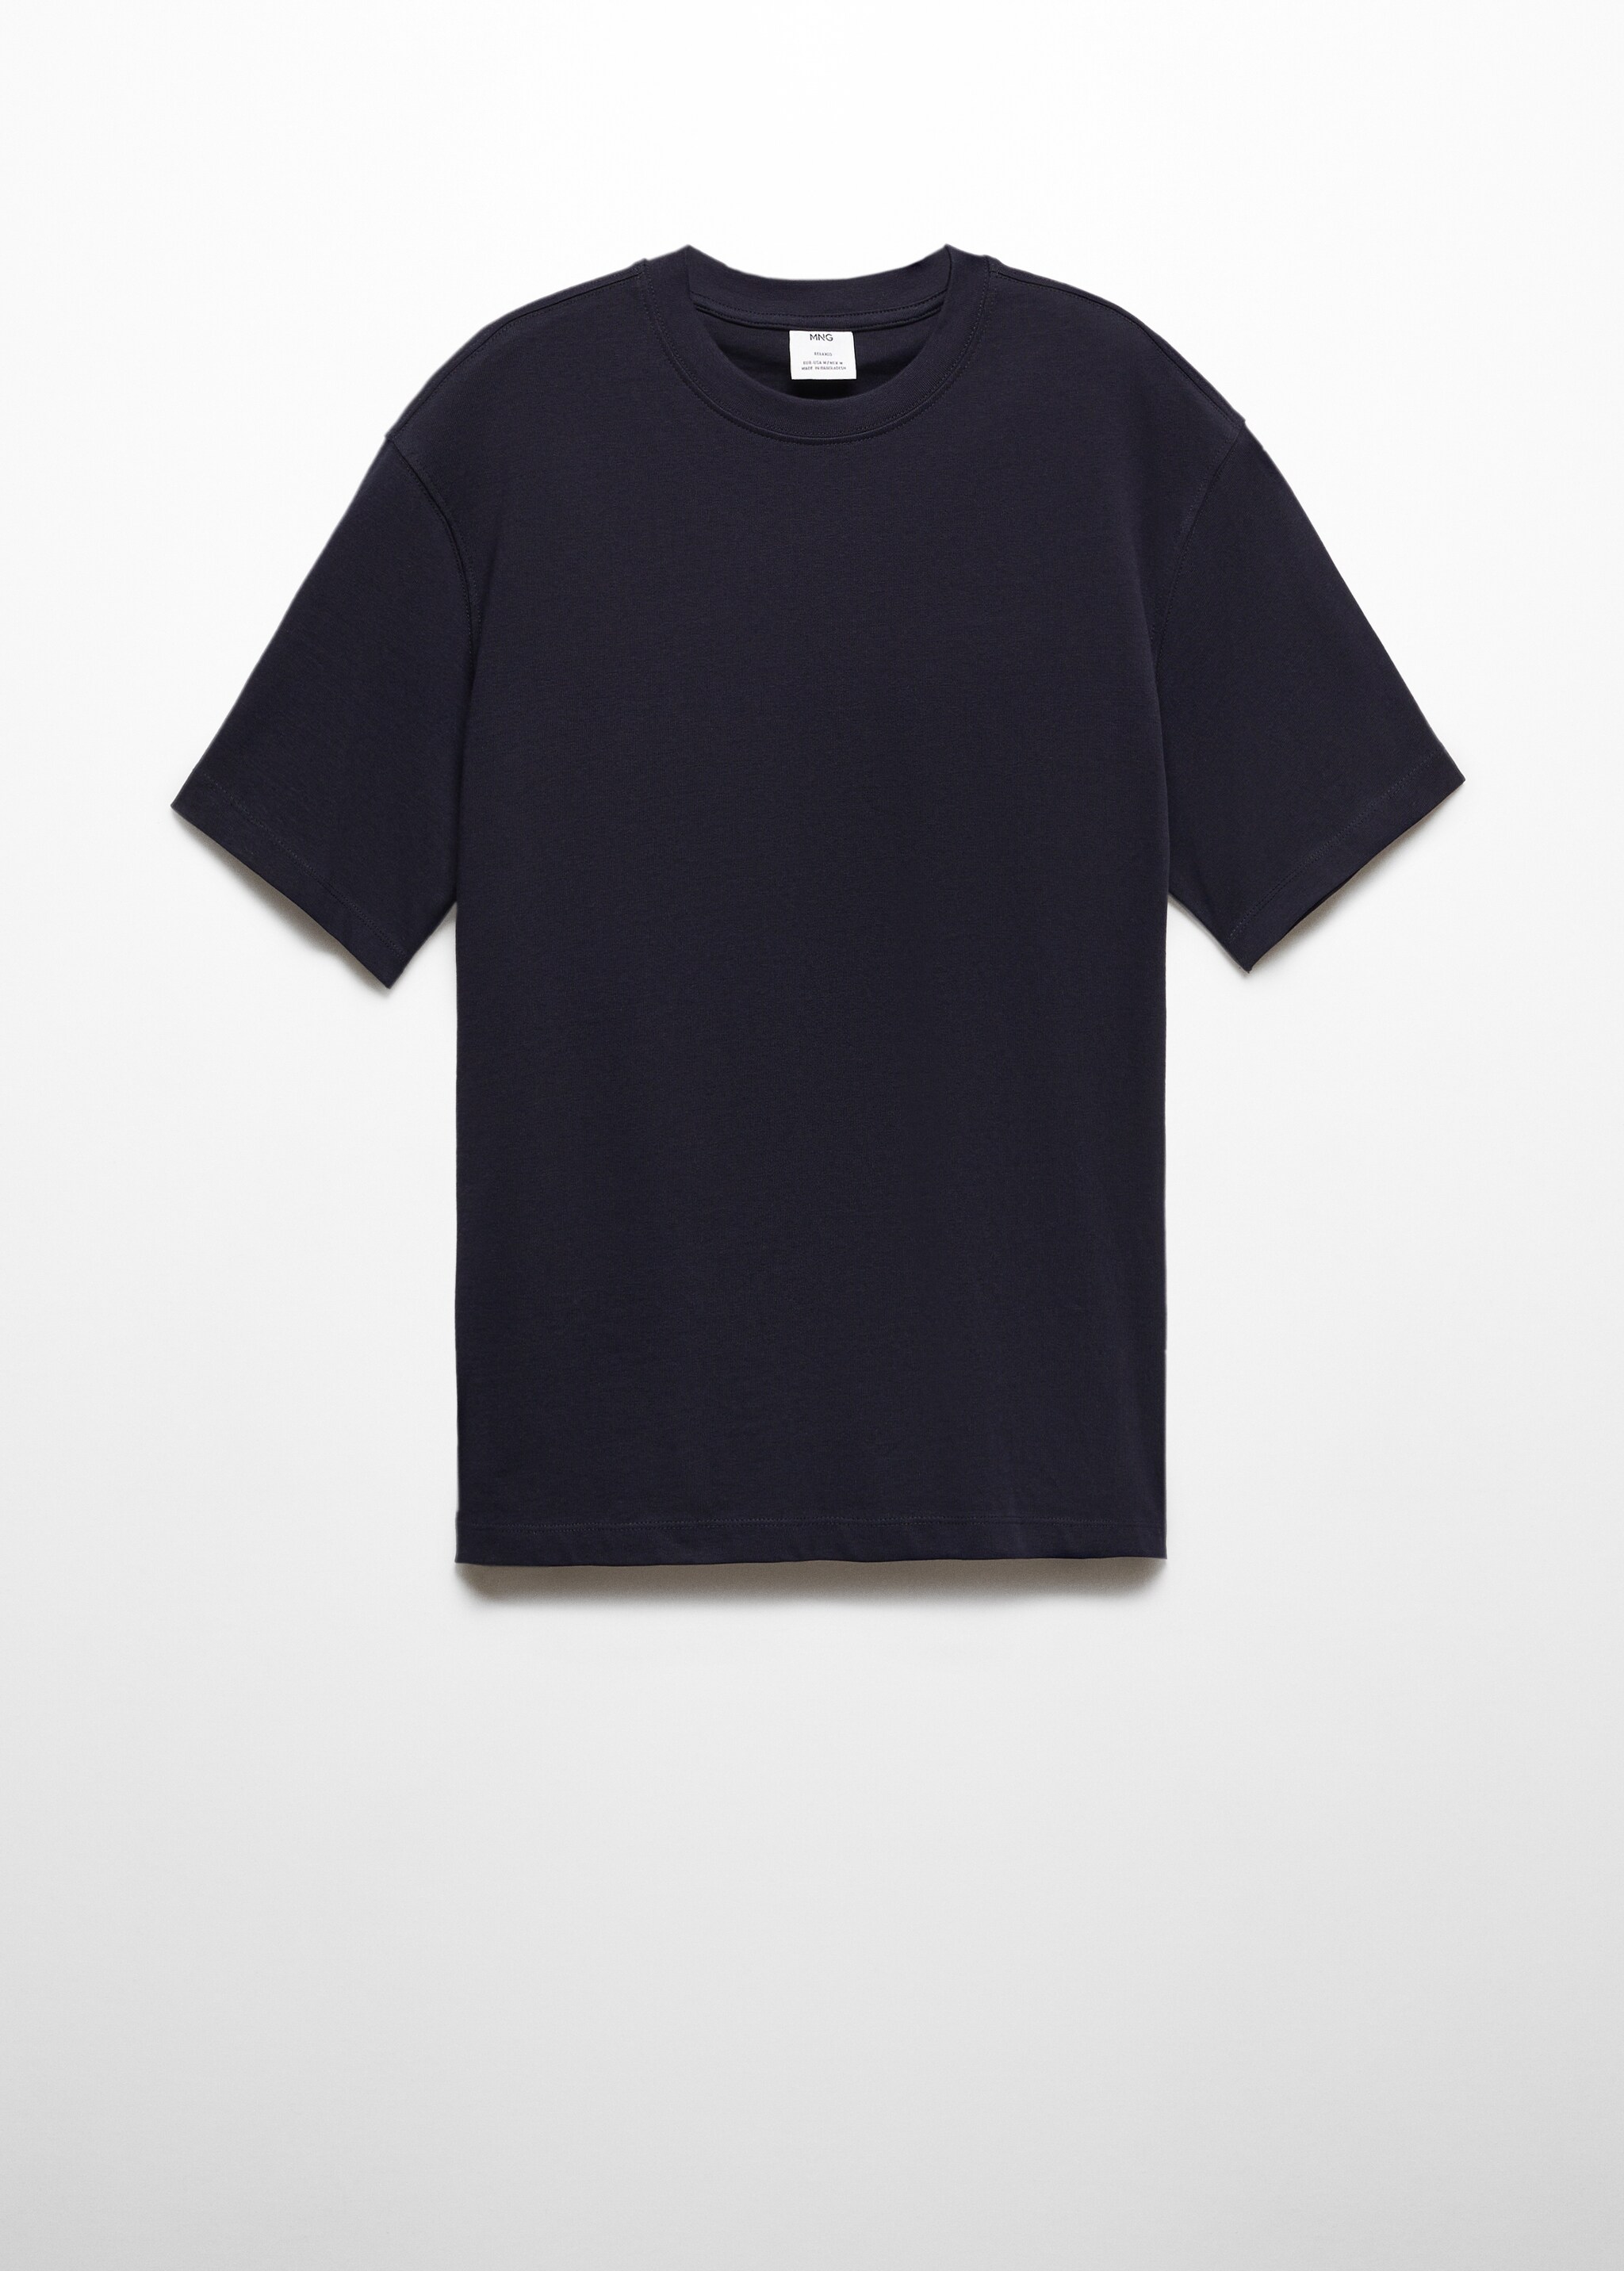 Camiseta básica 100% algodón relaxed fit - Artículo sin modelo